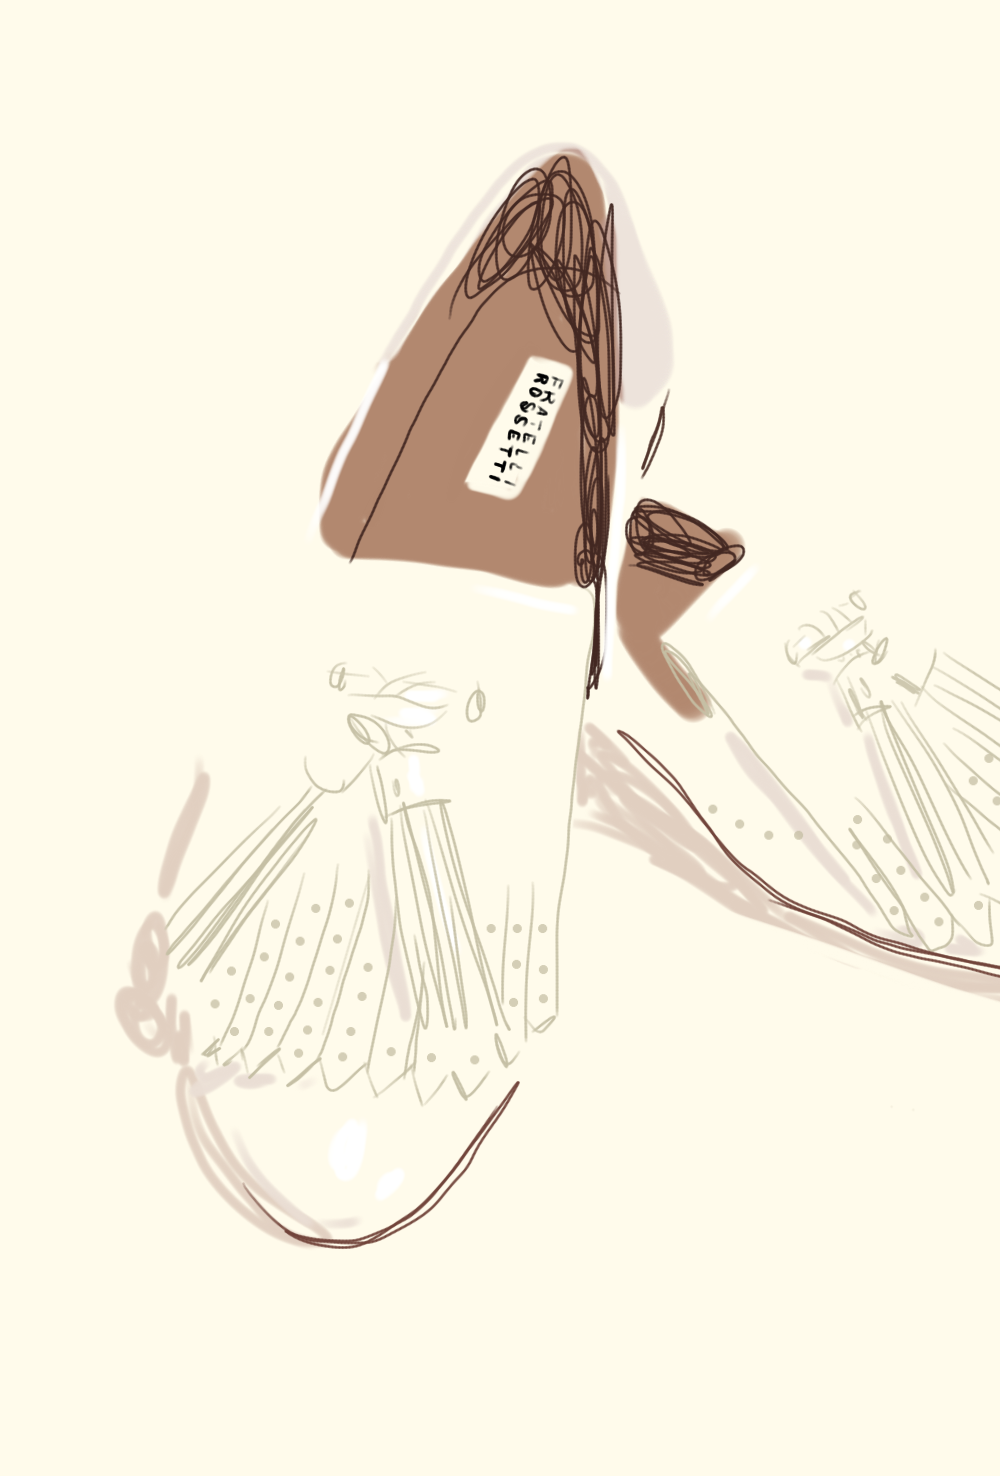 Hobo shoes, fashion illustration by Silvana Mariani